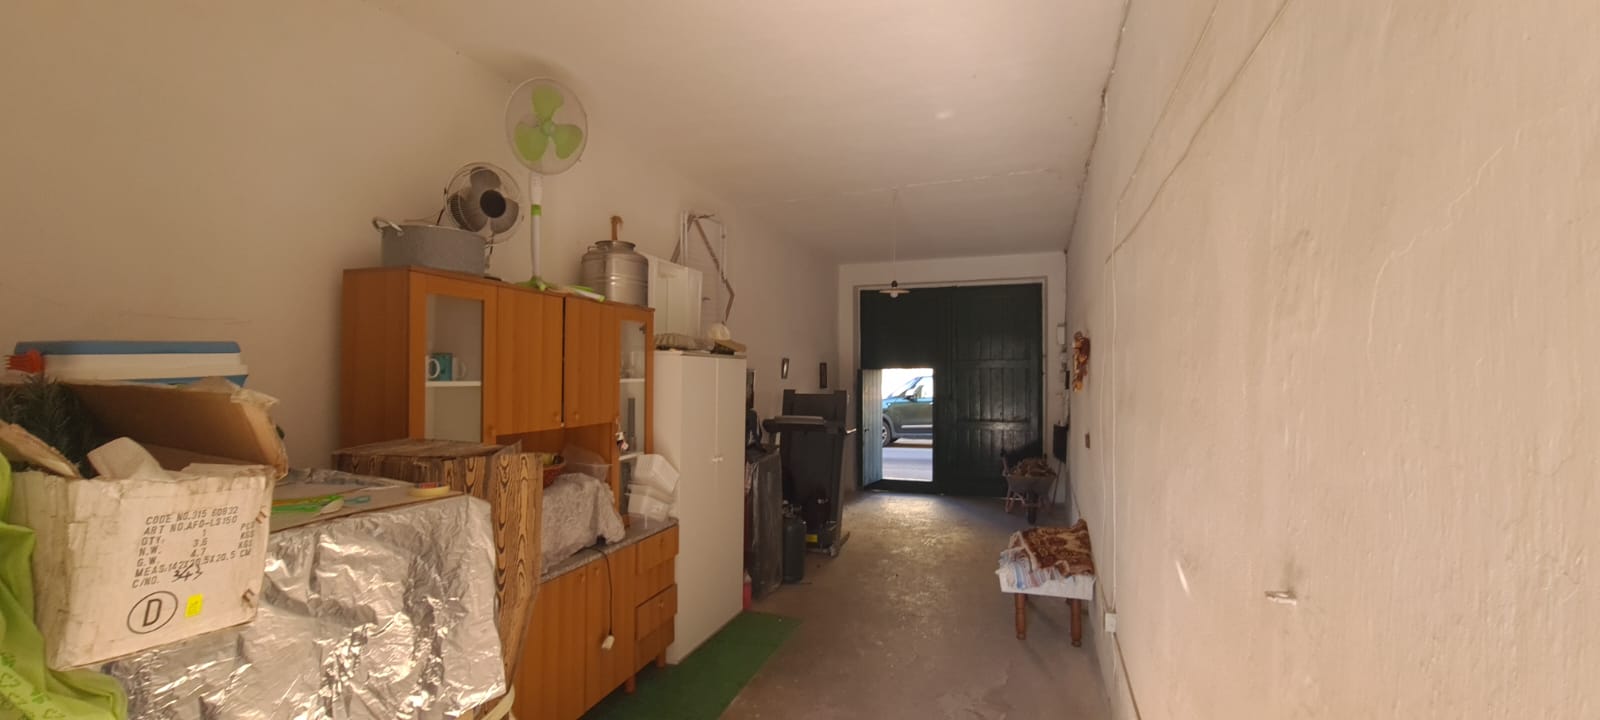 Vendite Salento: Vendita appartamento (Salve) - garage